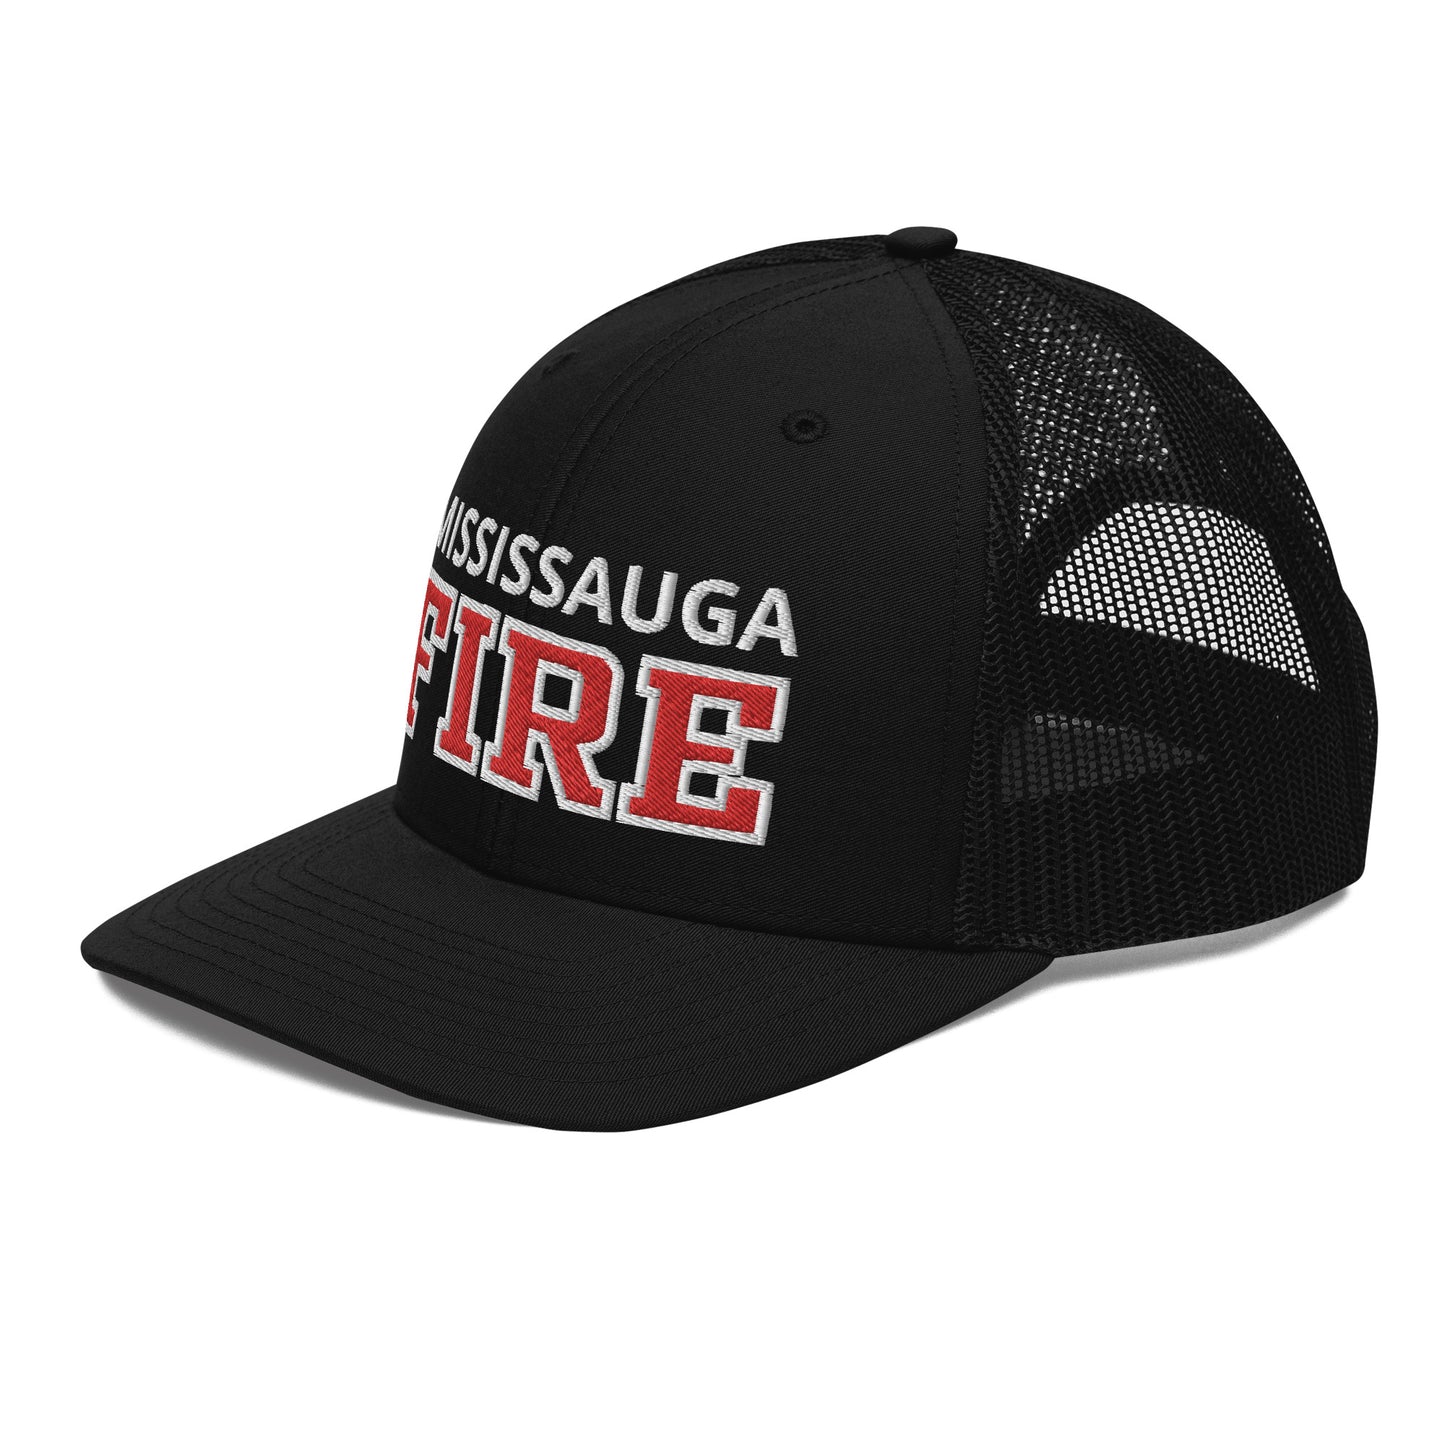 Custom Canadian Fire Department Mesh/ Trucker Hat